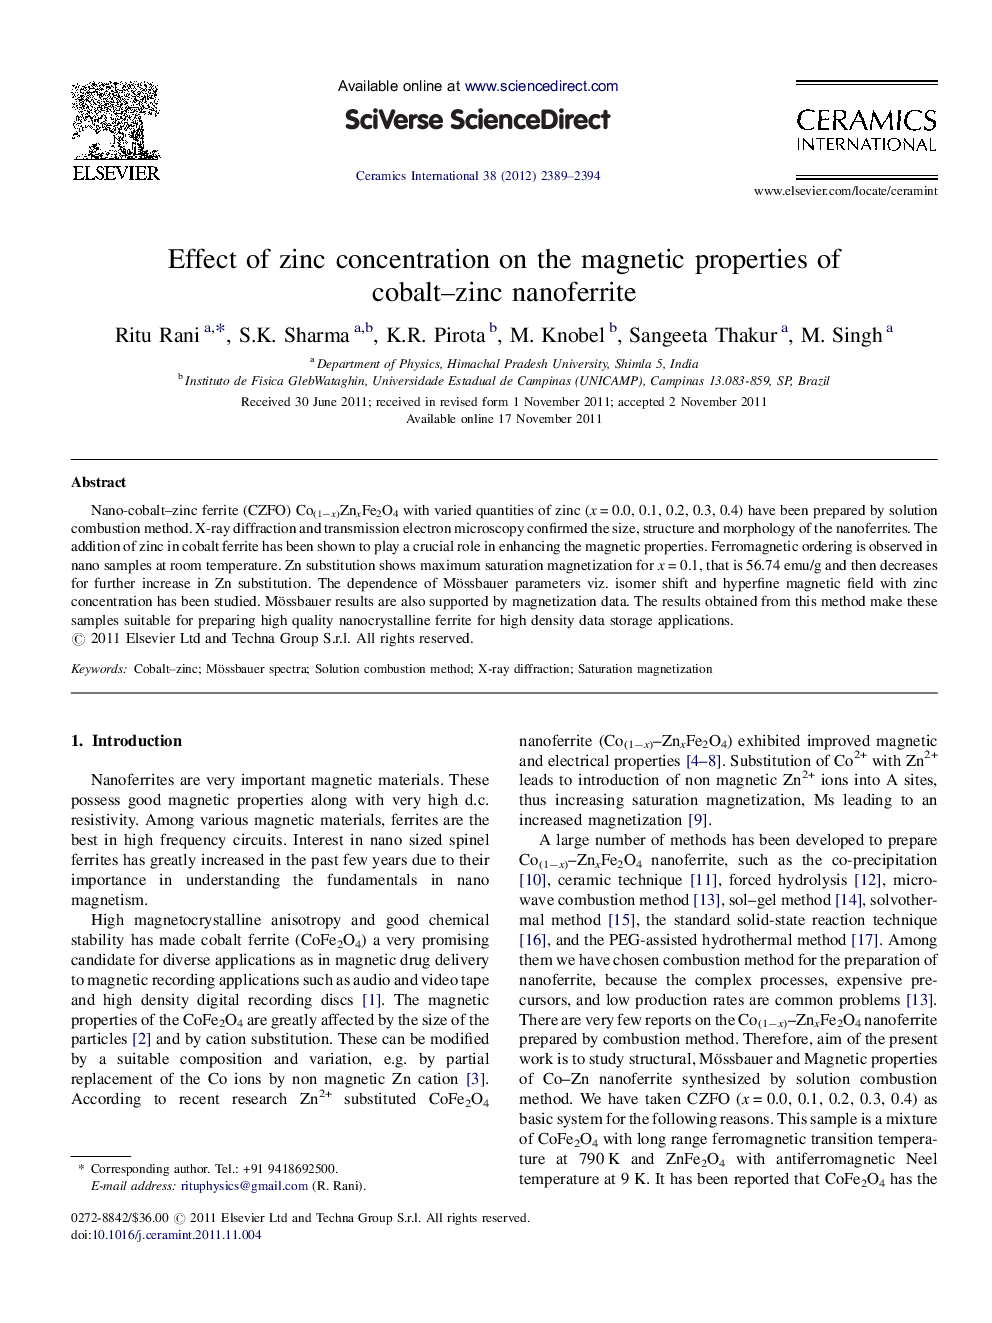 Effect of zinc concentration on the magnetic properties of cobalt–zinc nanoferrite